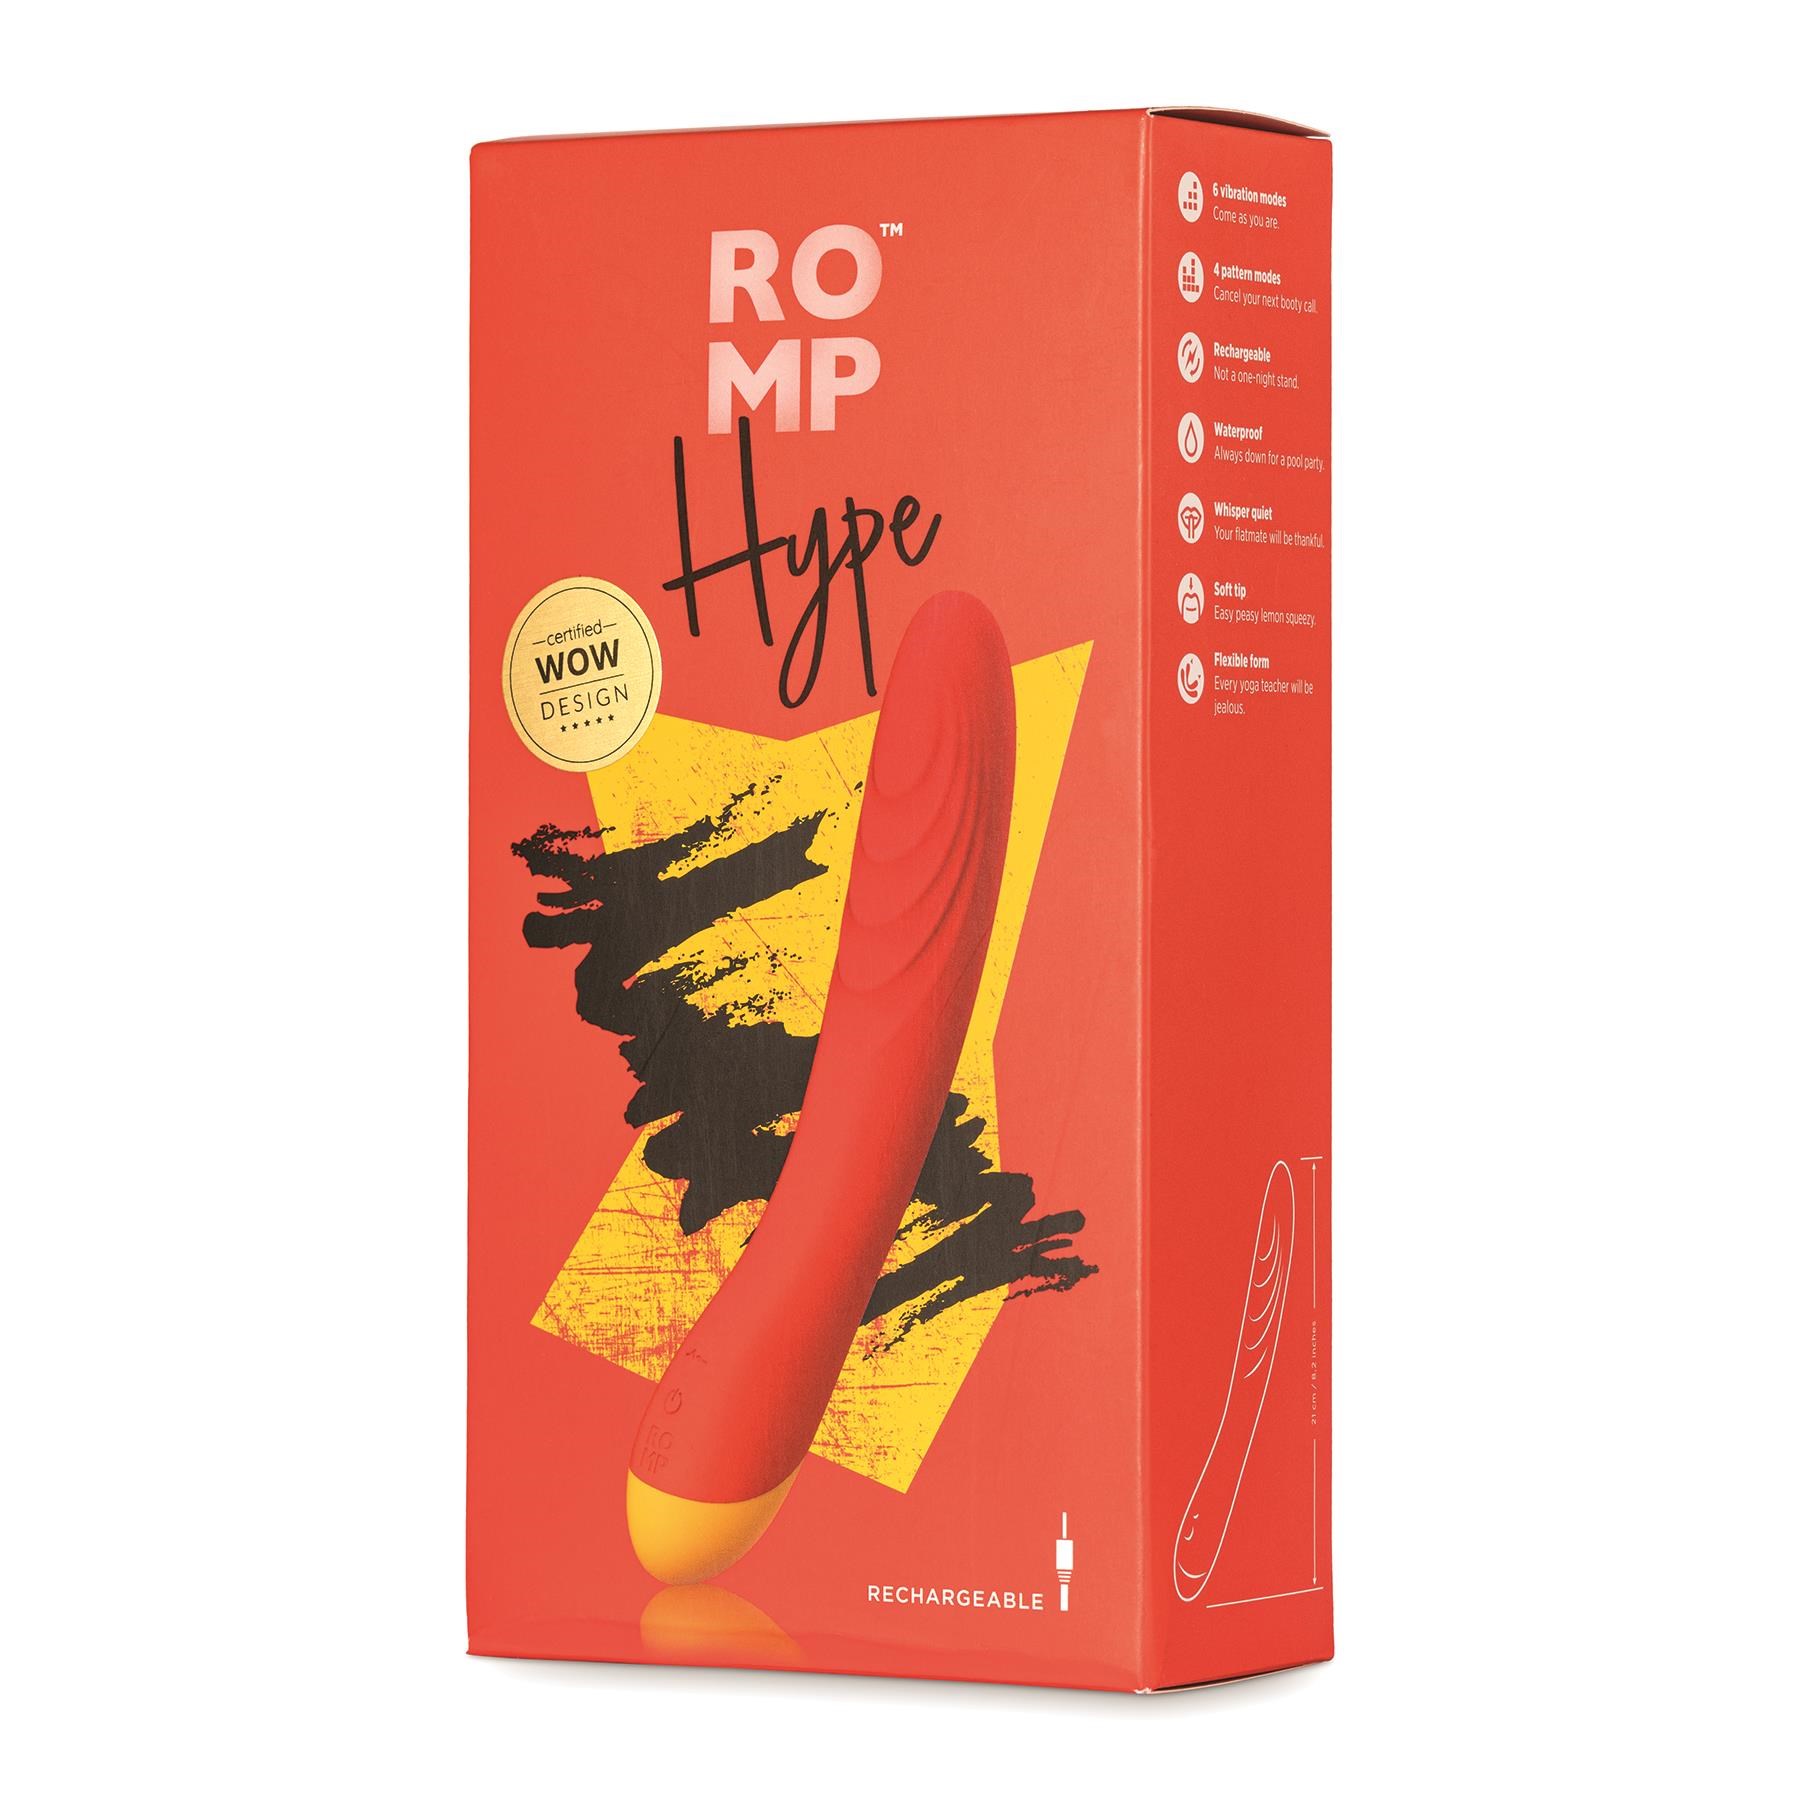 Romp Hype G-Spot package shot